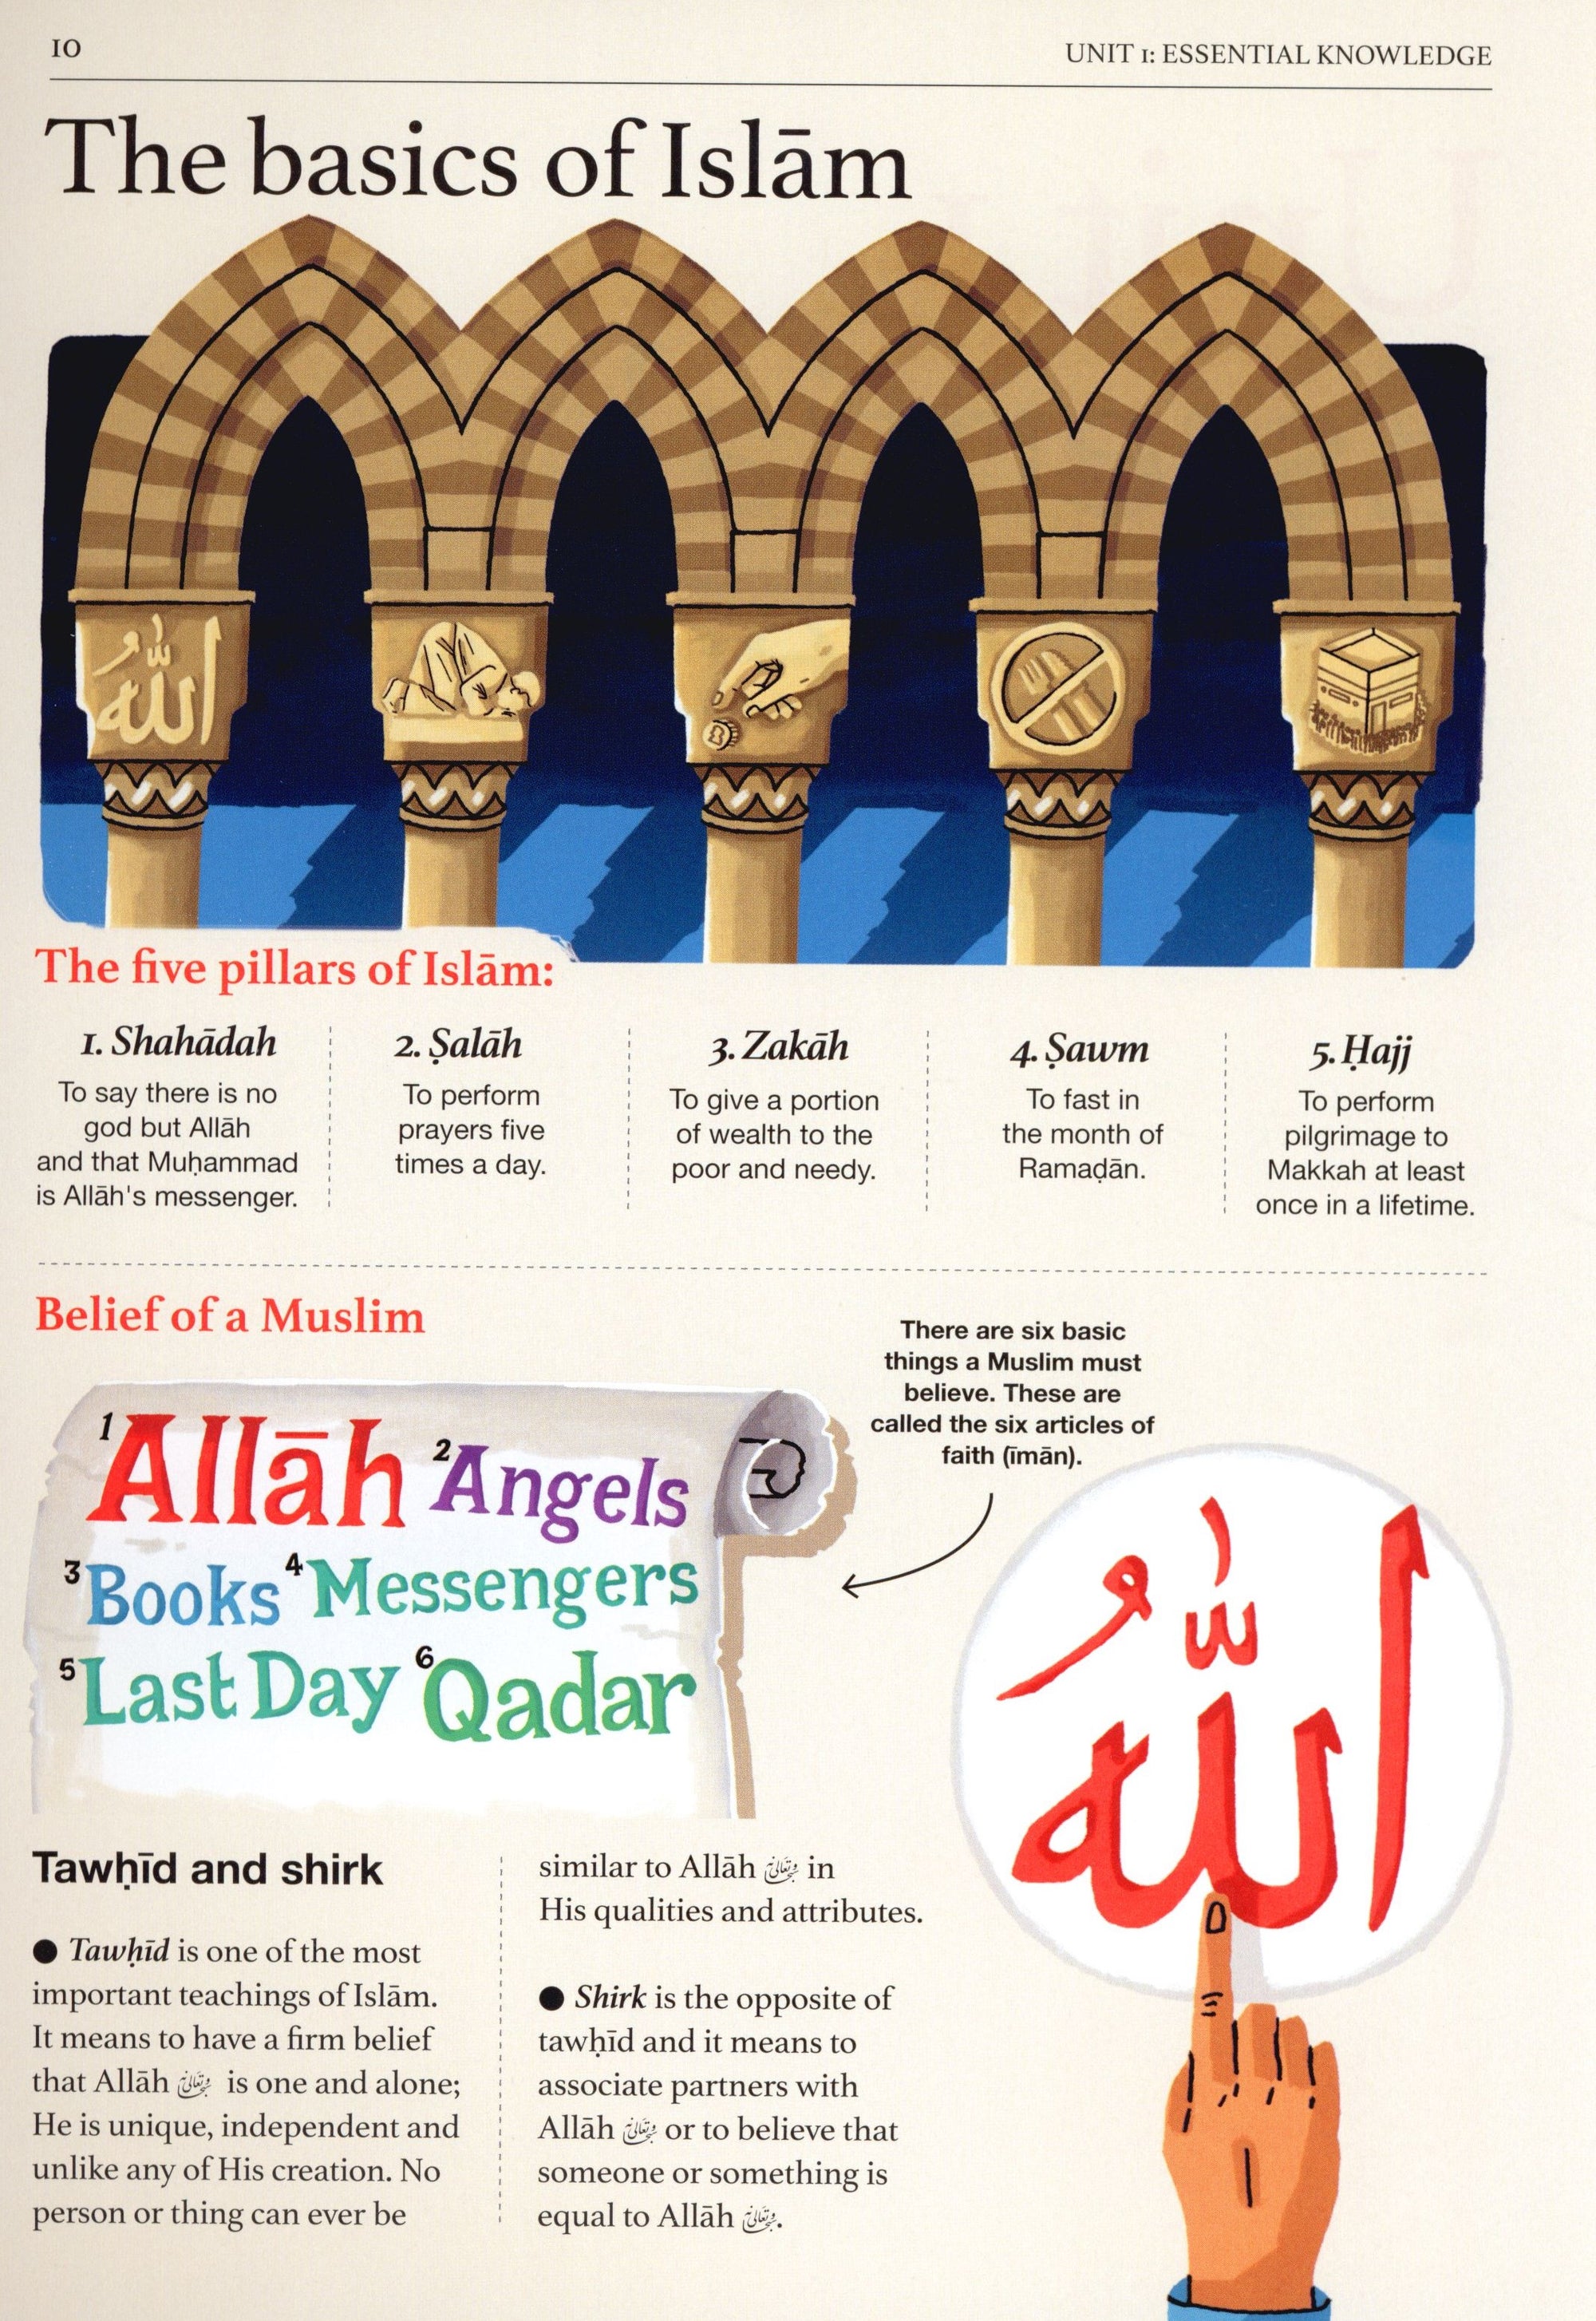 Safar Islamic Studies Textbook 7